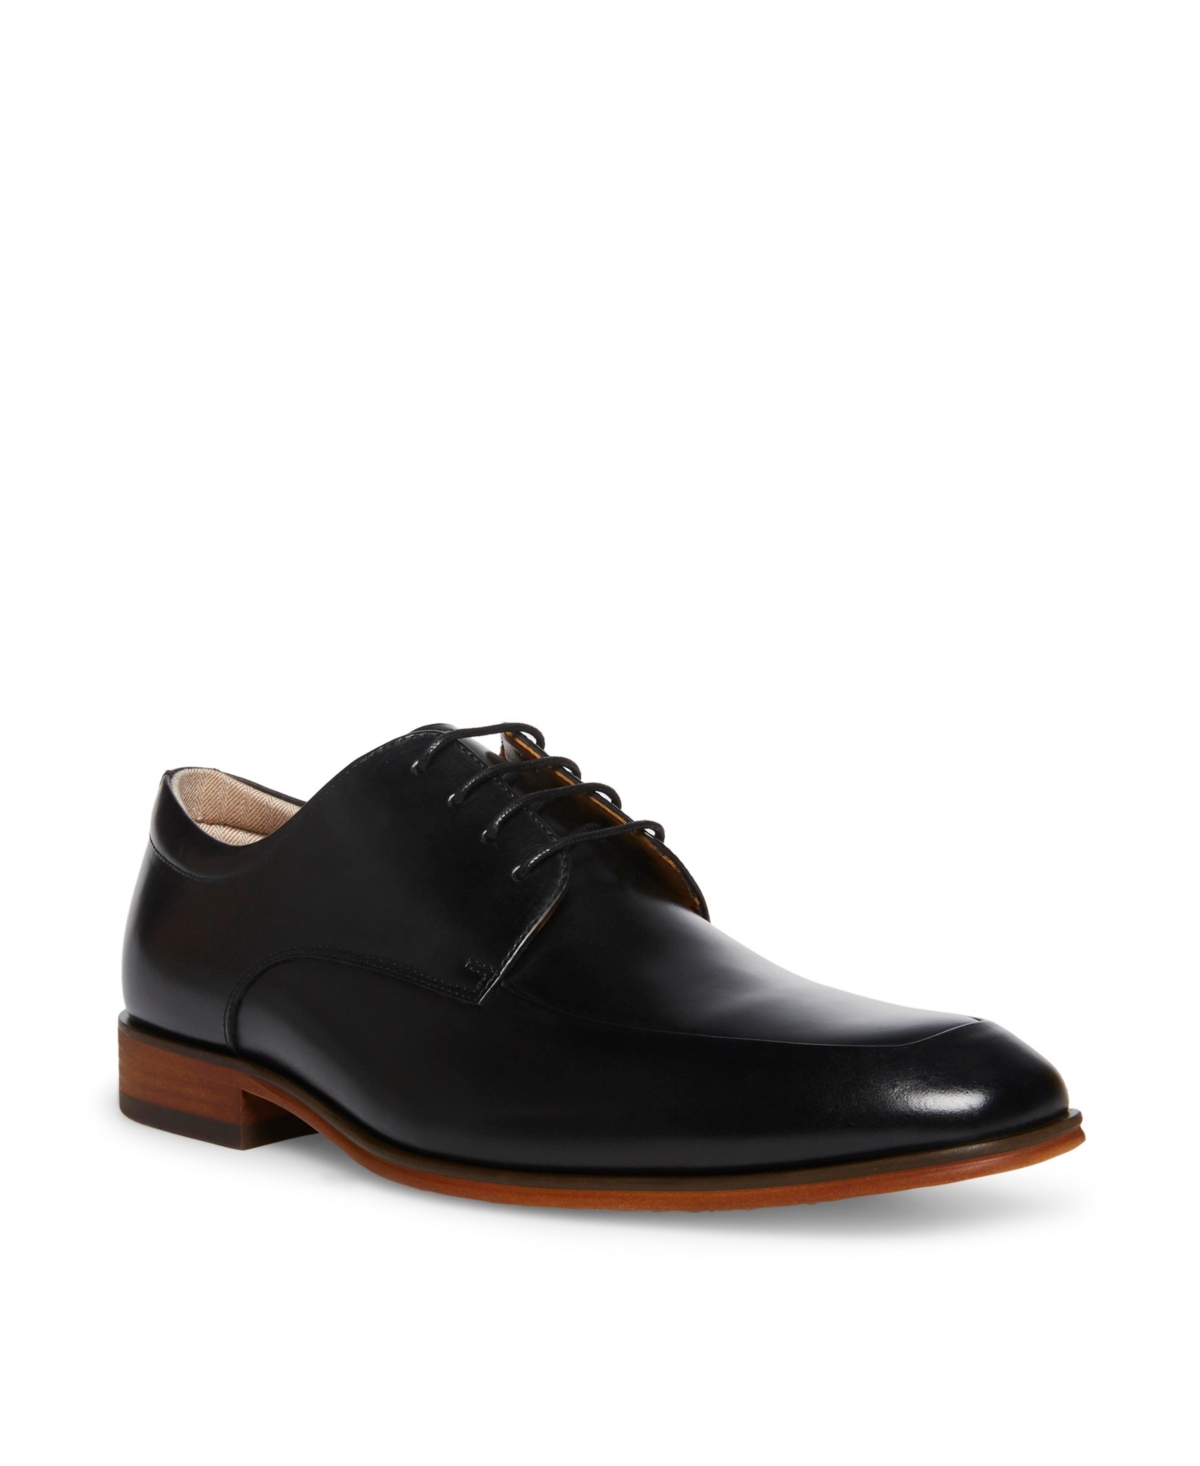 Men's Tasher Oxford Dress Shoes - Tan Leather